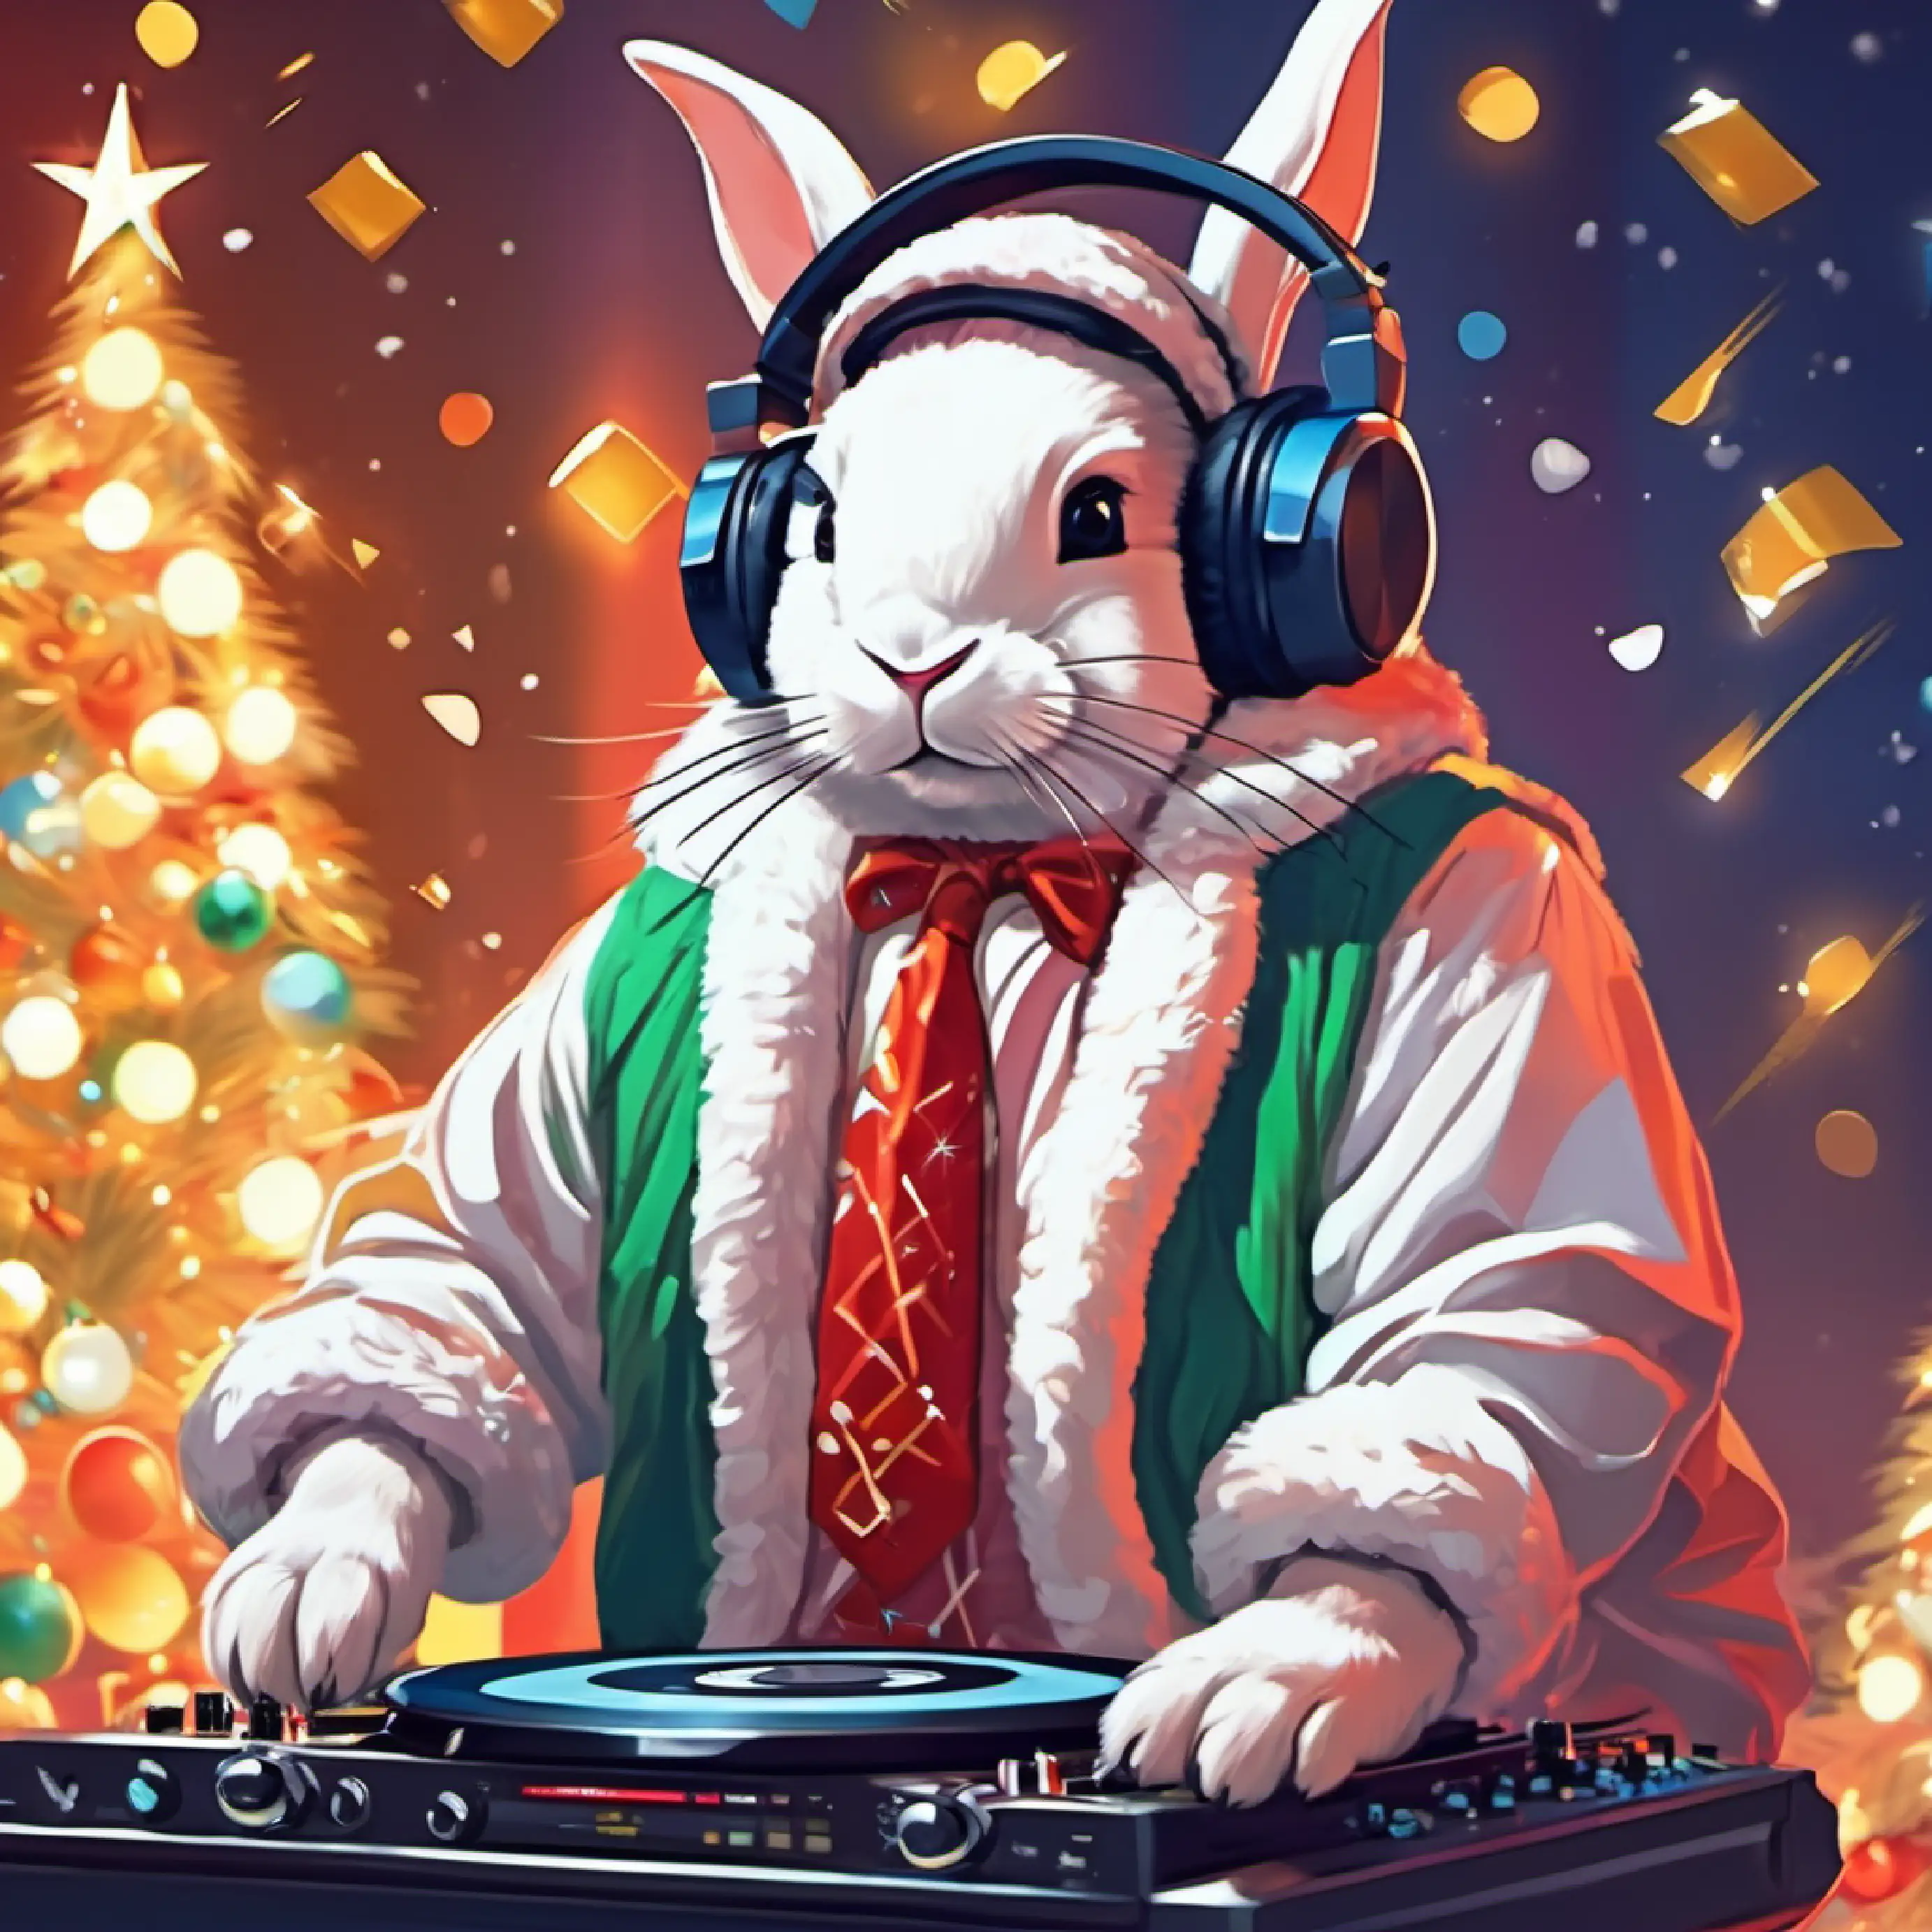 Cool DJ Bunny, big headphones, musical notes on shirt hasn't seen headband, plays music, uplifting moment